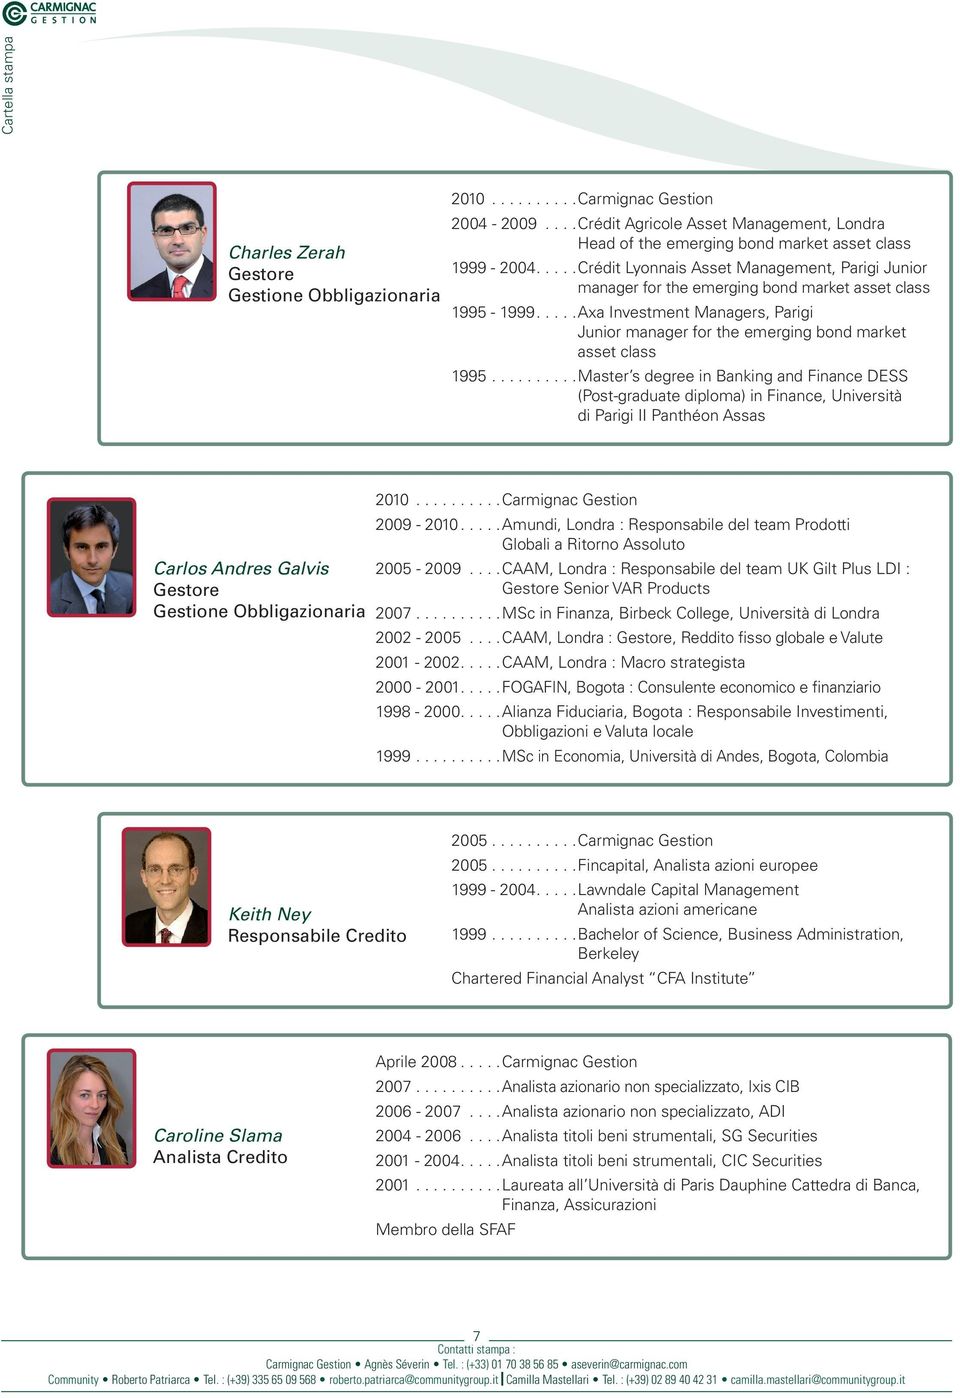 ....Axa Investment Managers, Parigi Junior manager for the emerging bond market asset class 1995.